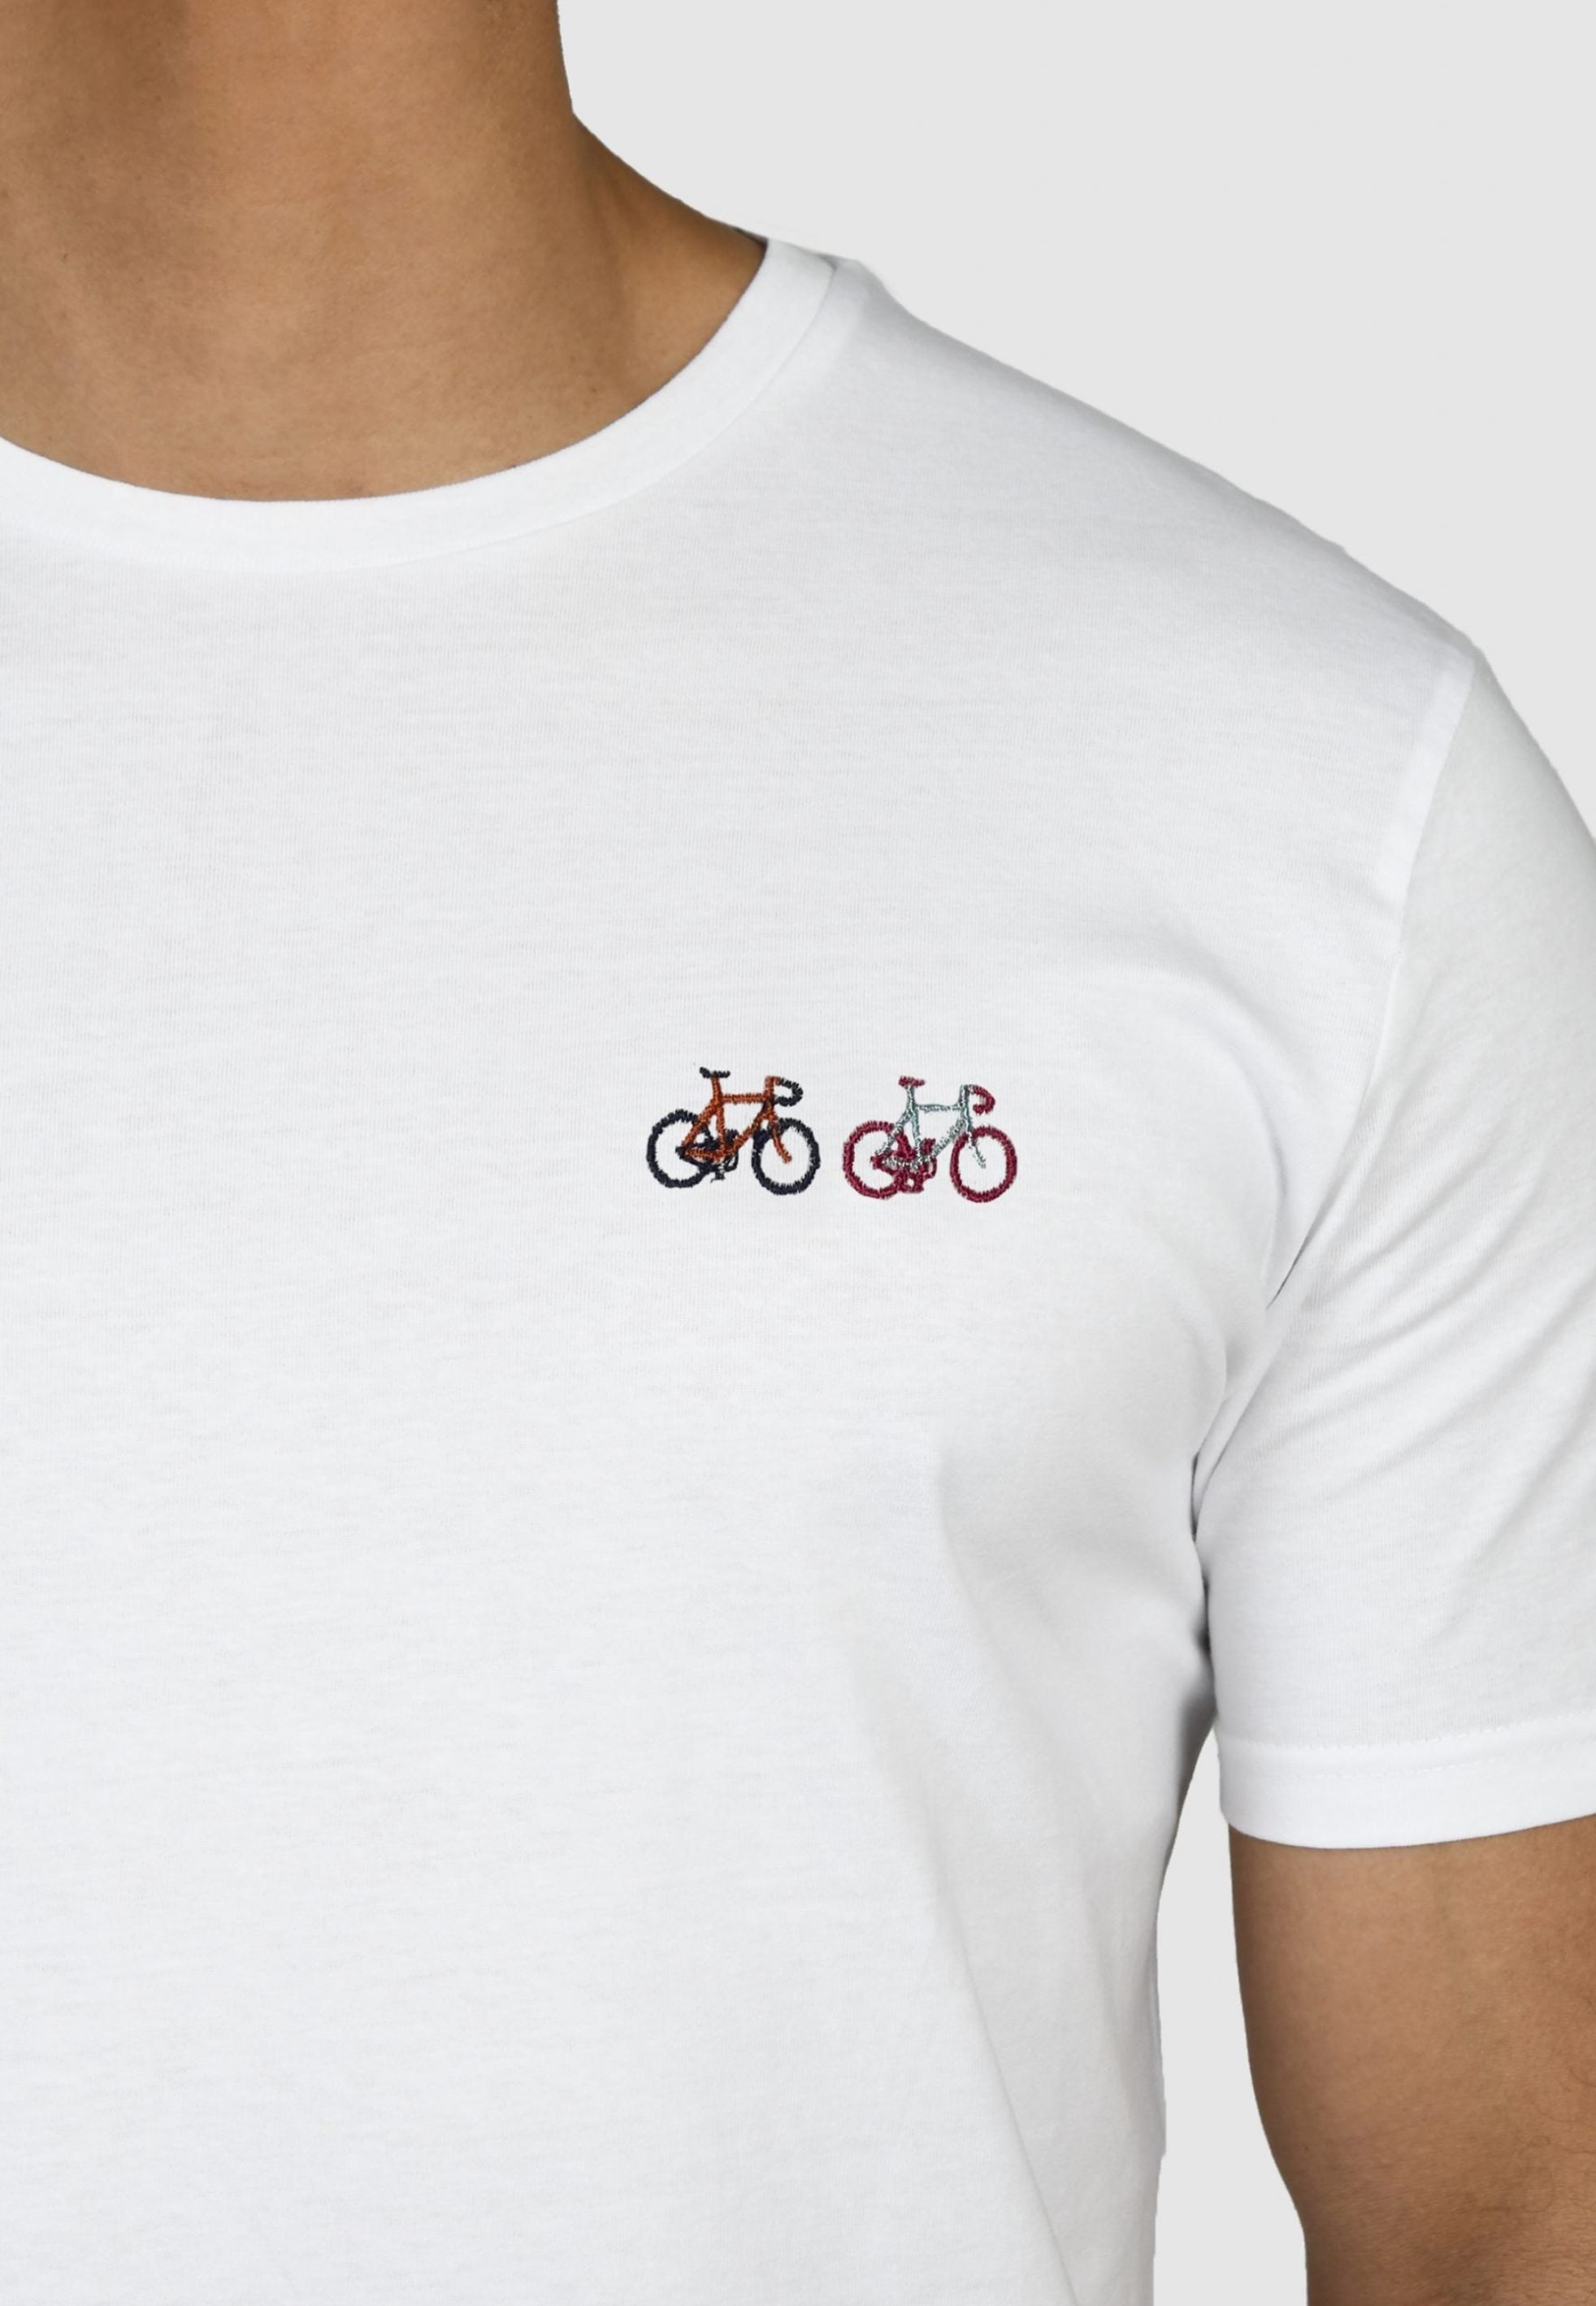 Bicycle Swim Trunks and T-shirt Bundle